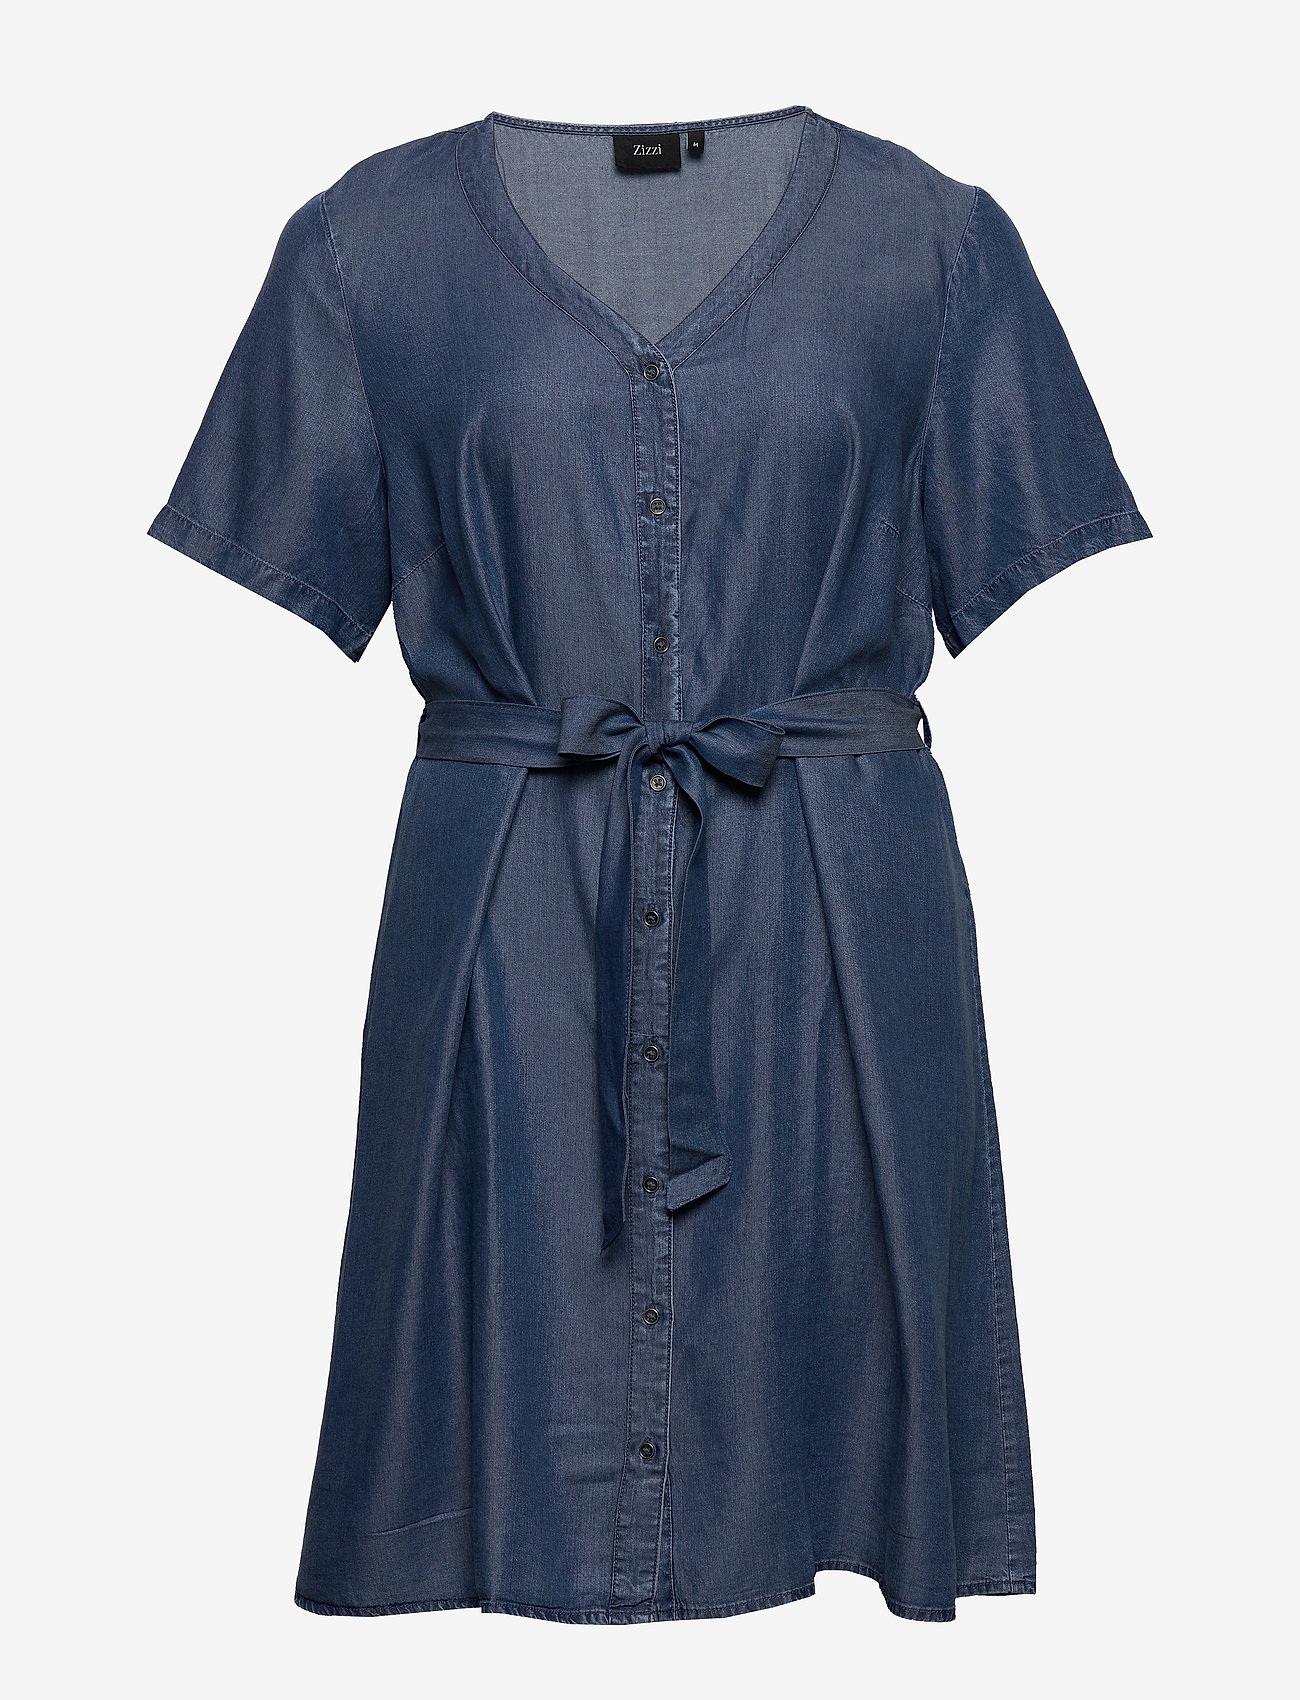 blue denim dress plus size